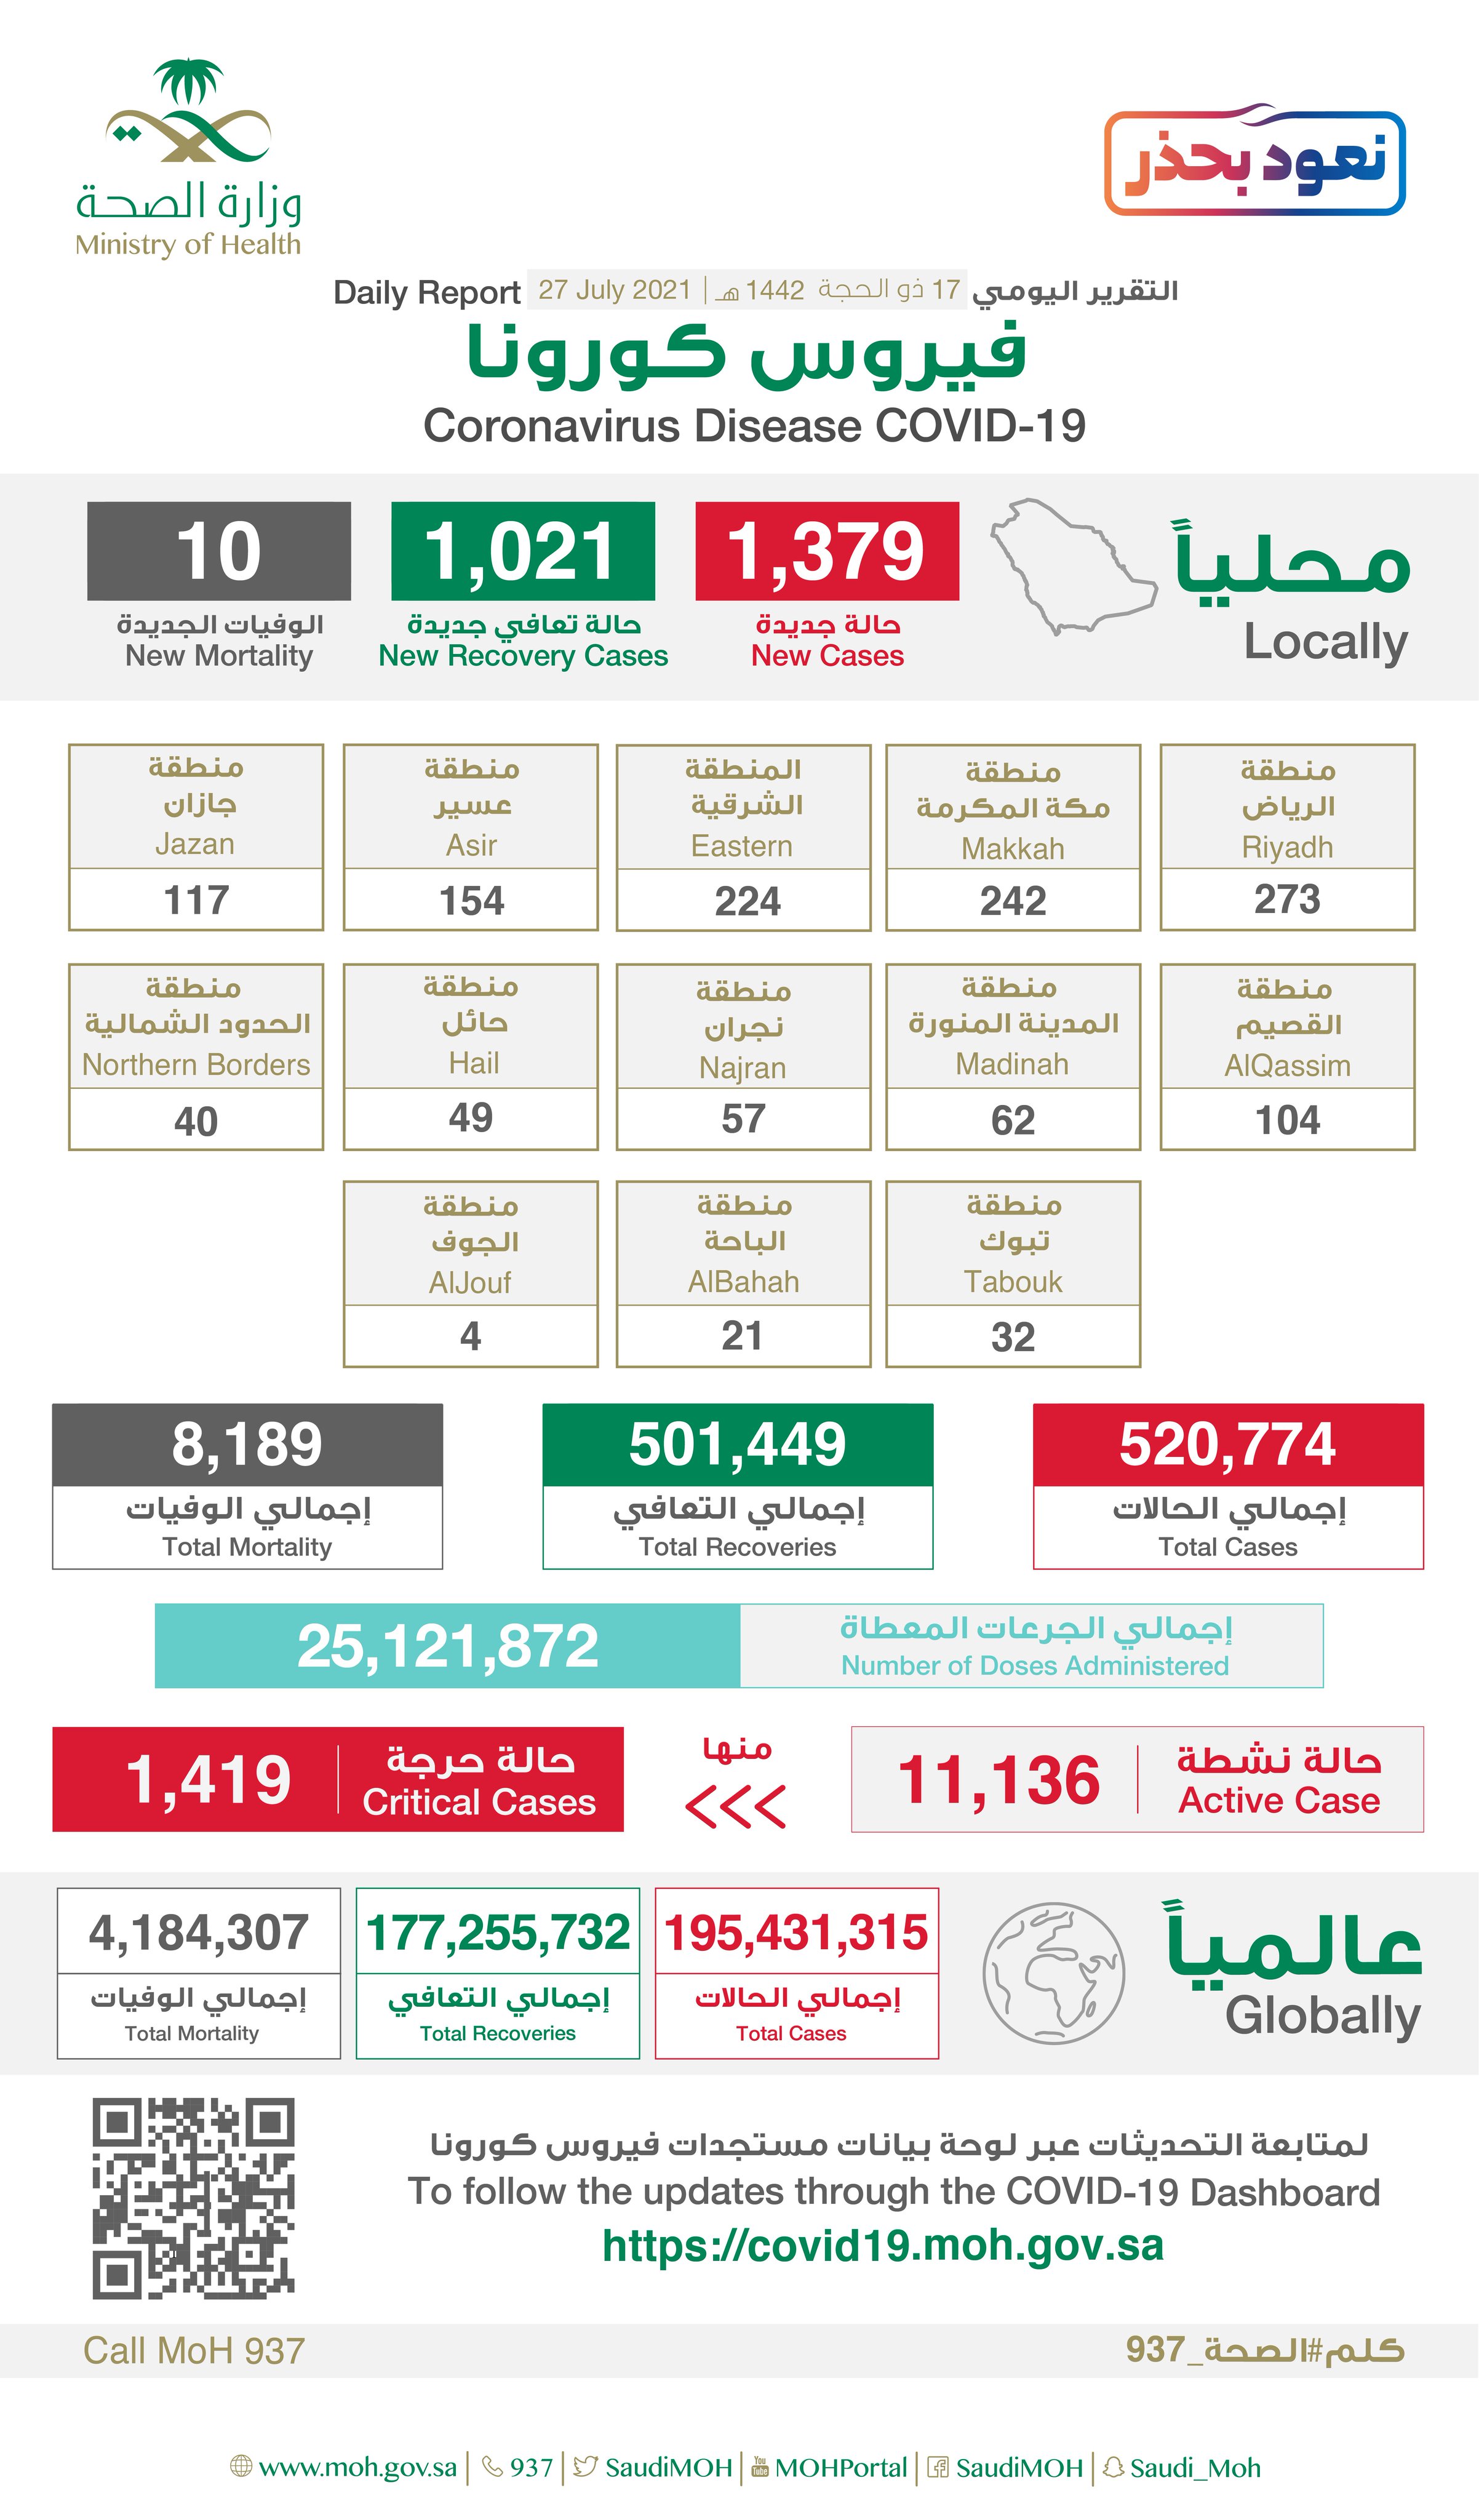 Saudi Arabia Coronavirus : Total Cases : 520,774 , New Cases :1,379, Cured : 501,449 , Deaths: 8,189 , Active Cases : 11,136